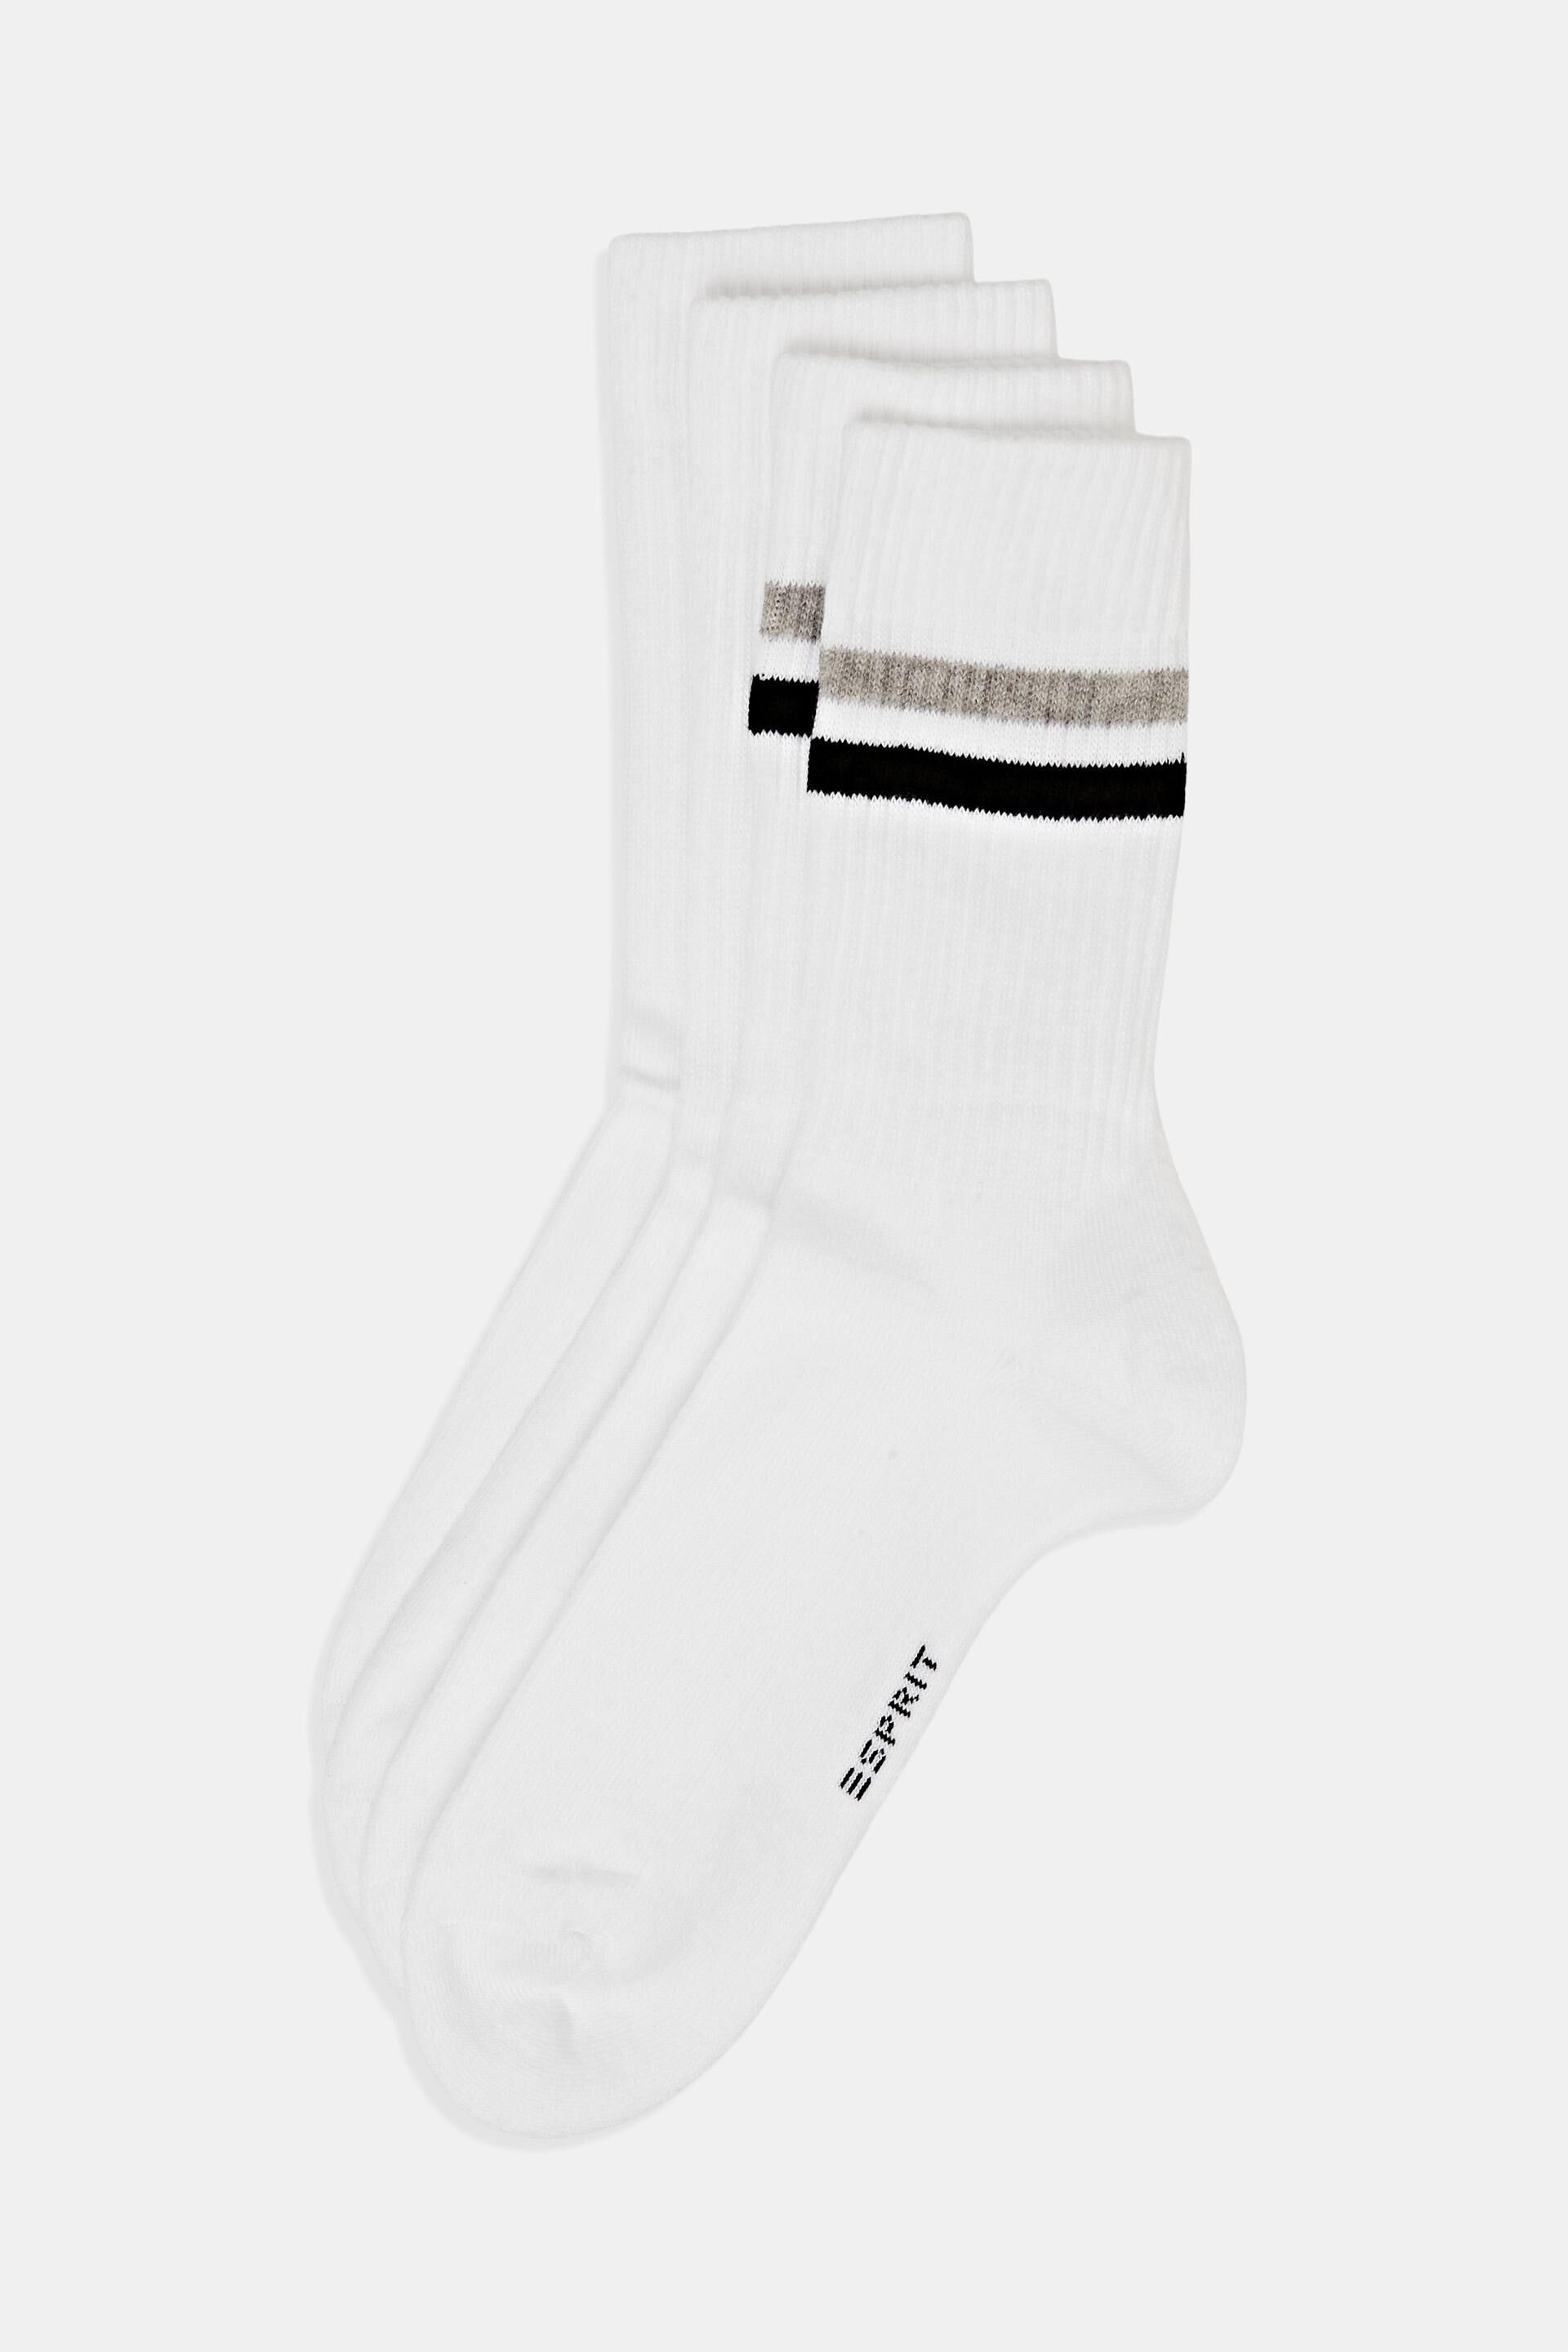 Esprit socks, organic cotton 2-pack athletic of